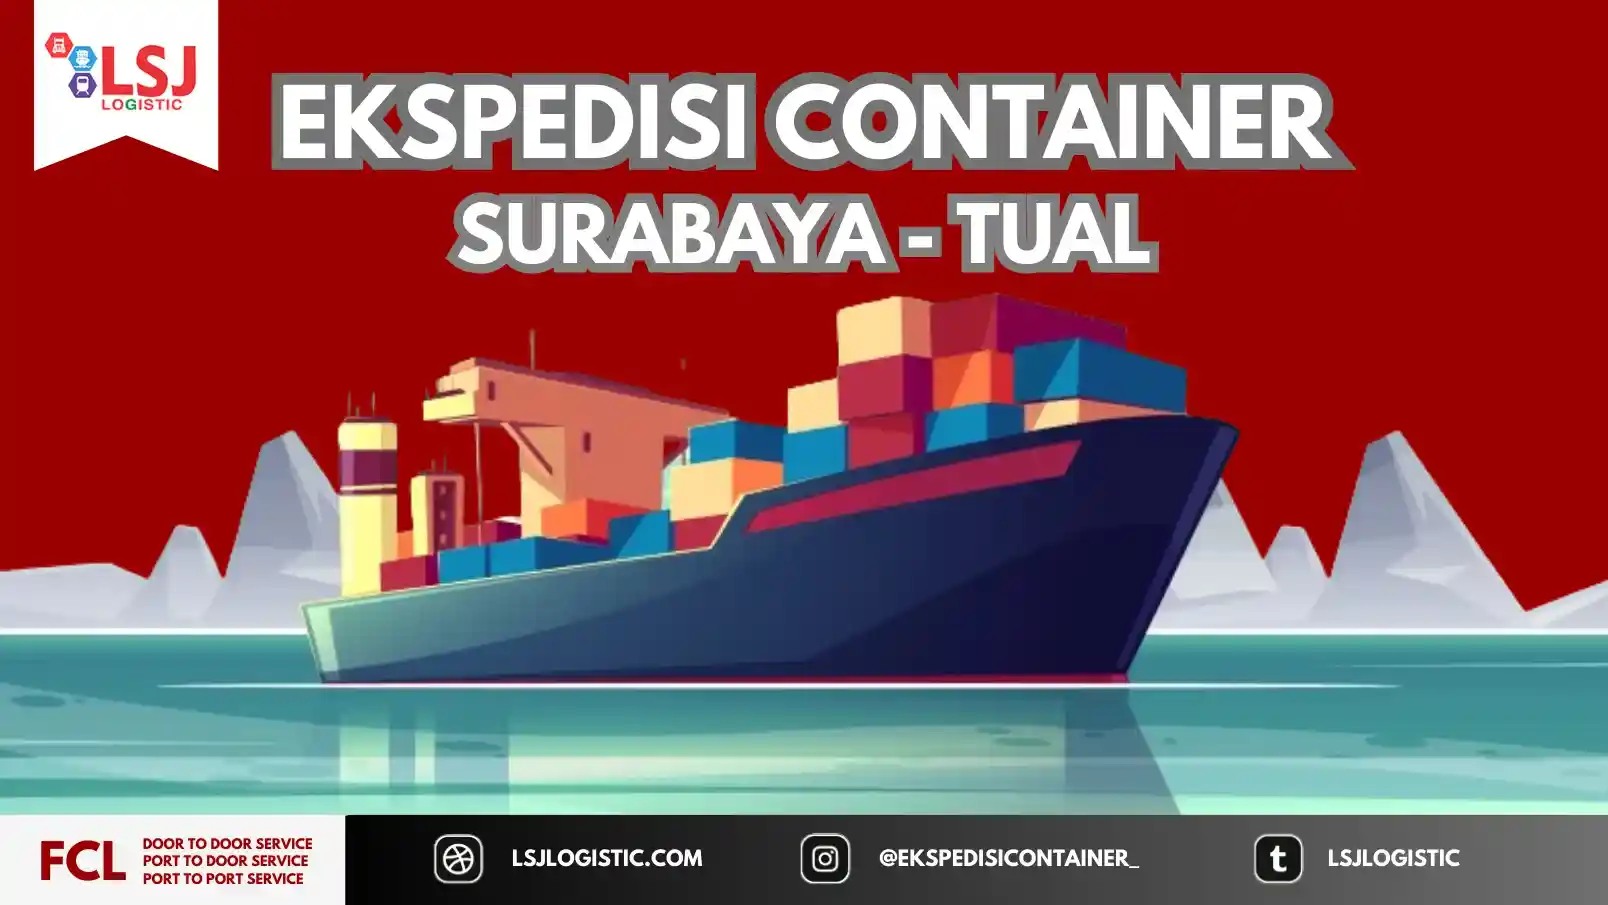 Harga Pengiriman Container Surabaya Tual